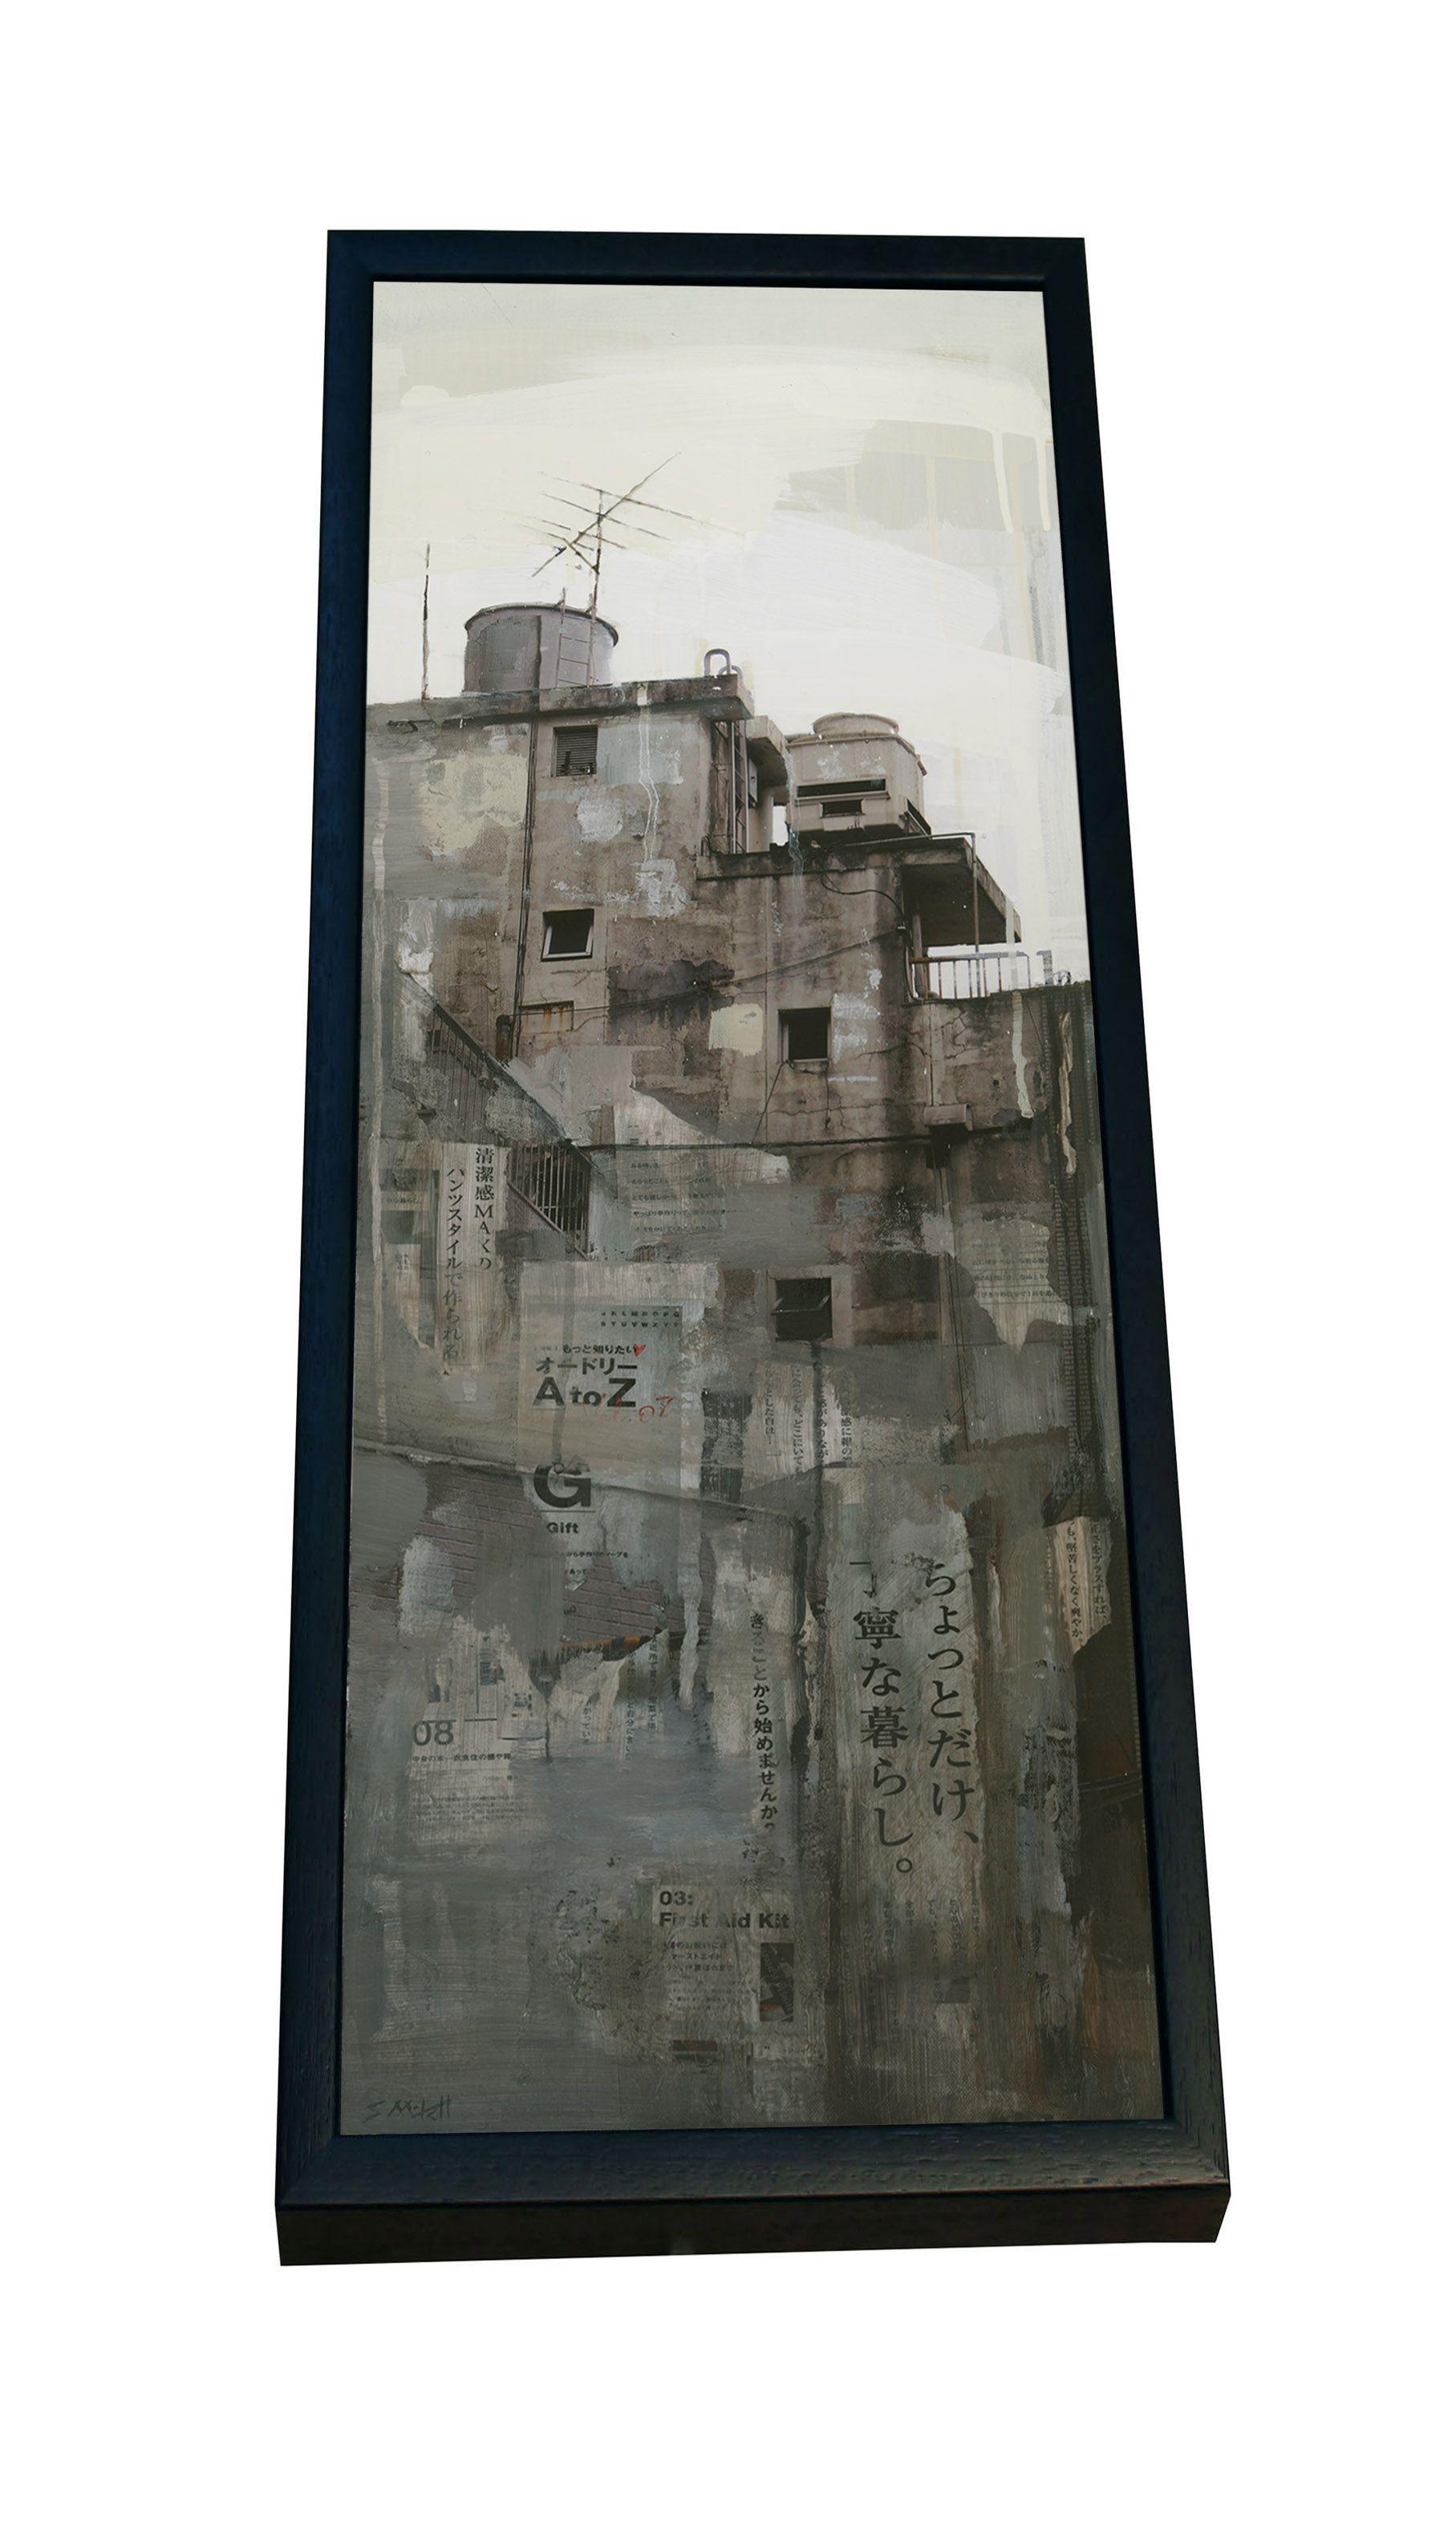 Shabby Tokyo Apartment, Mixed Media on Wood Panel - Contemporary Mixed Media Art by Stephen Mitchell